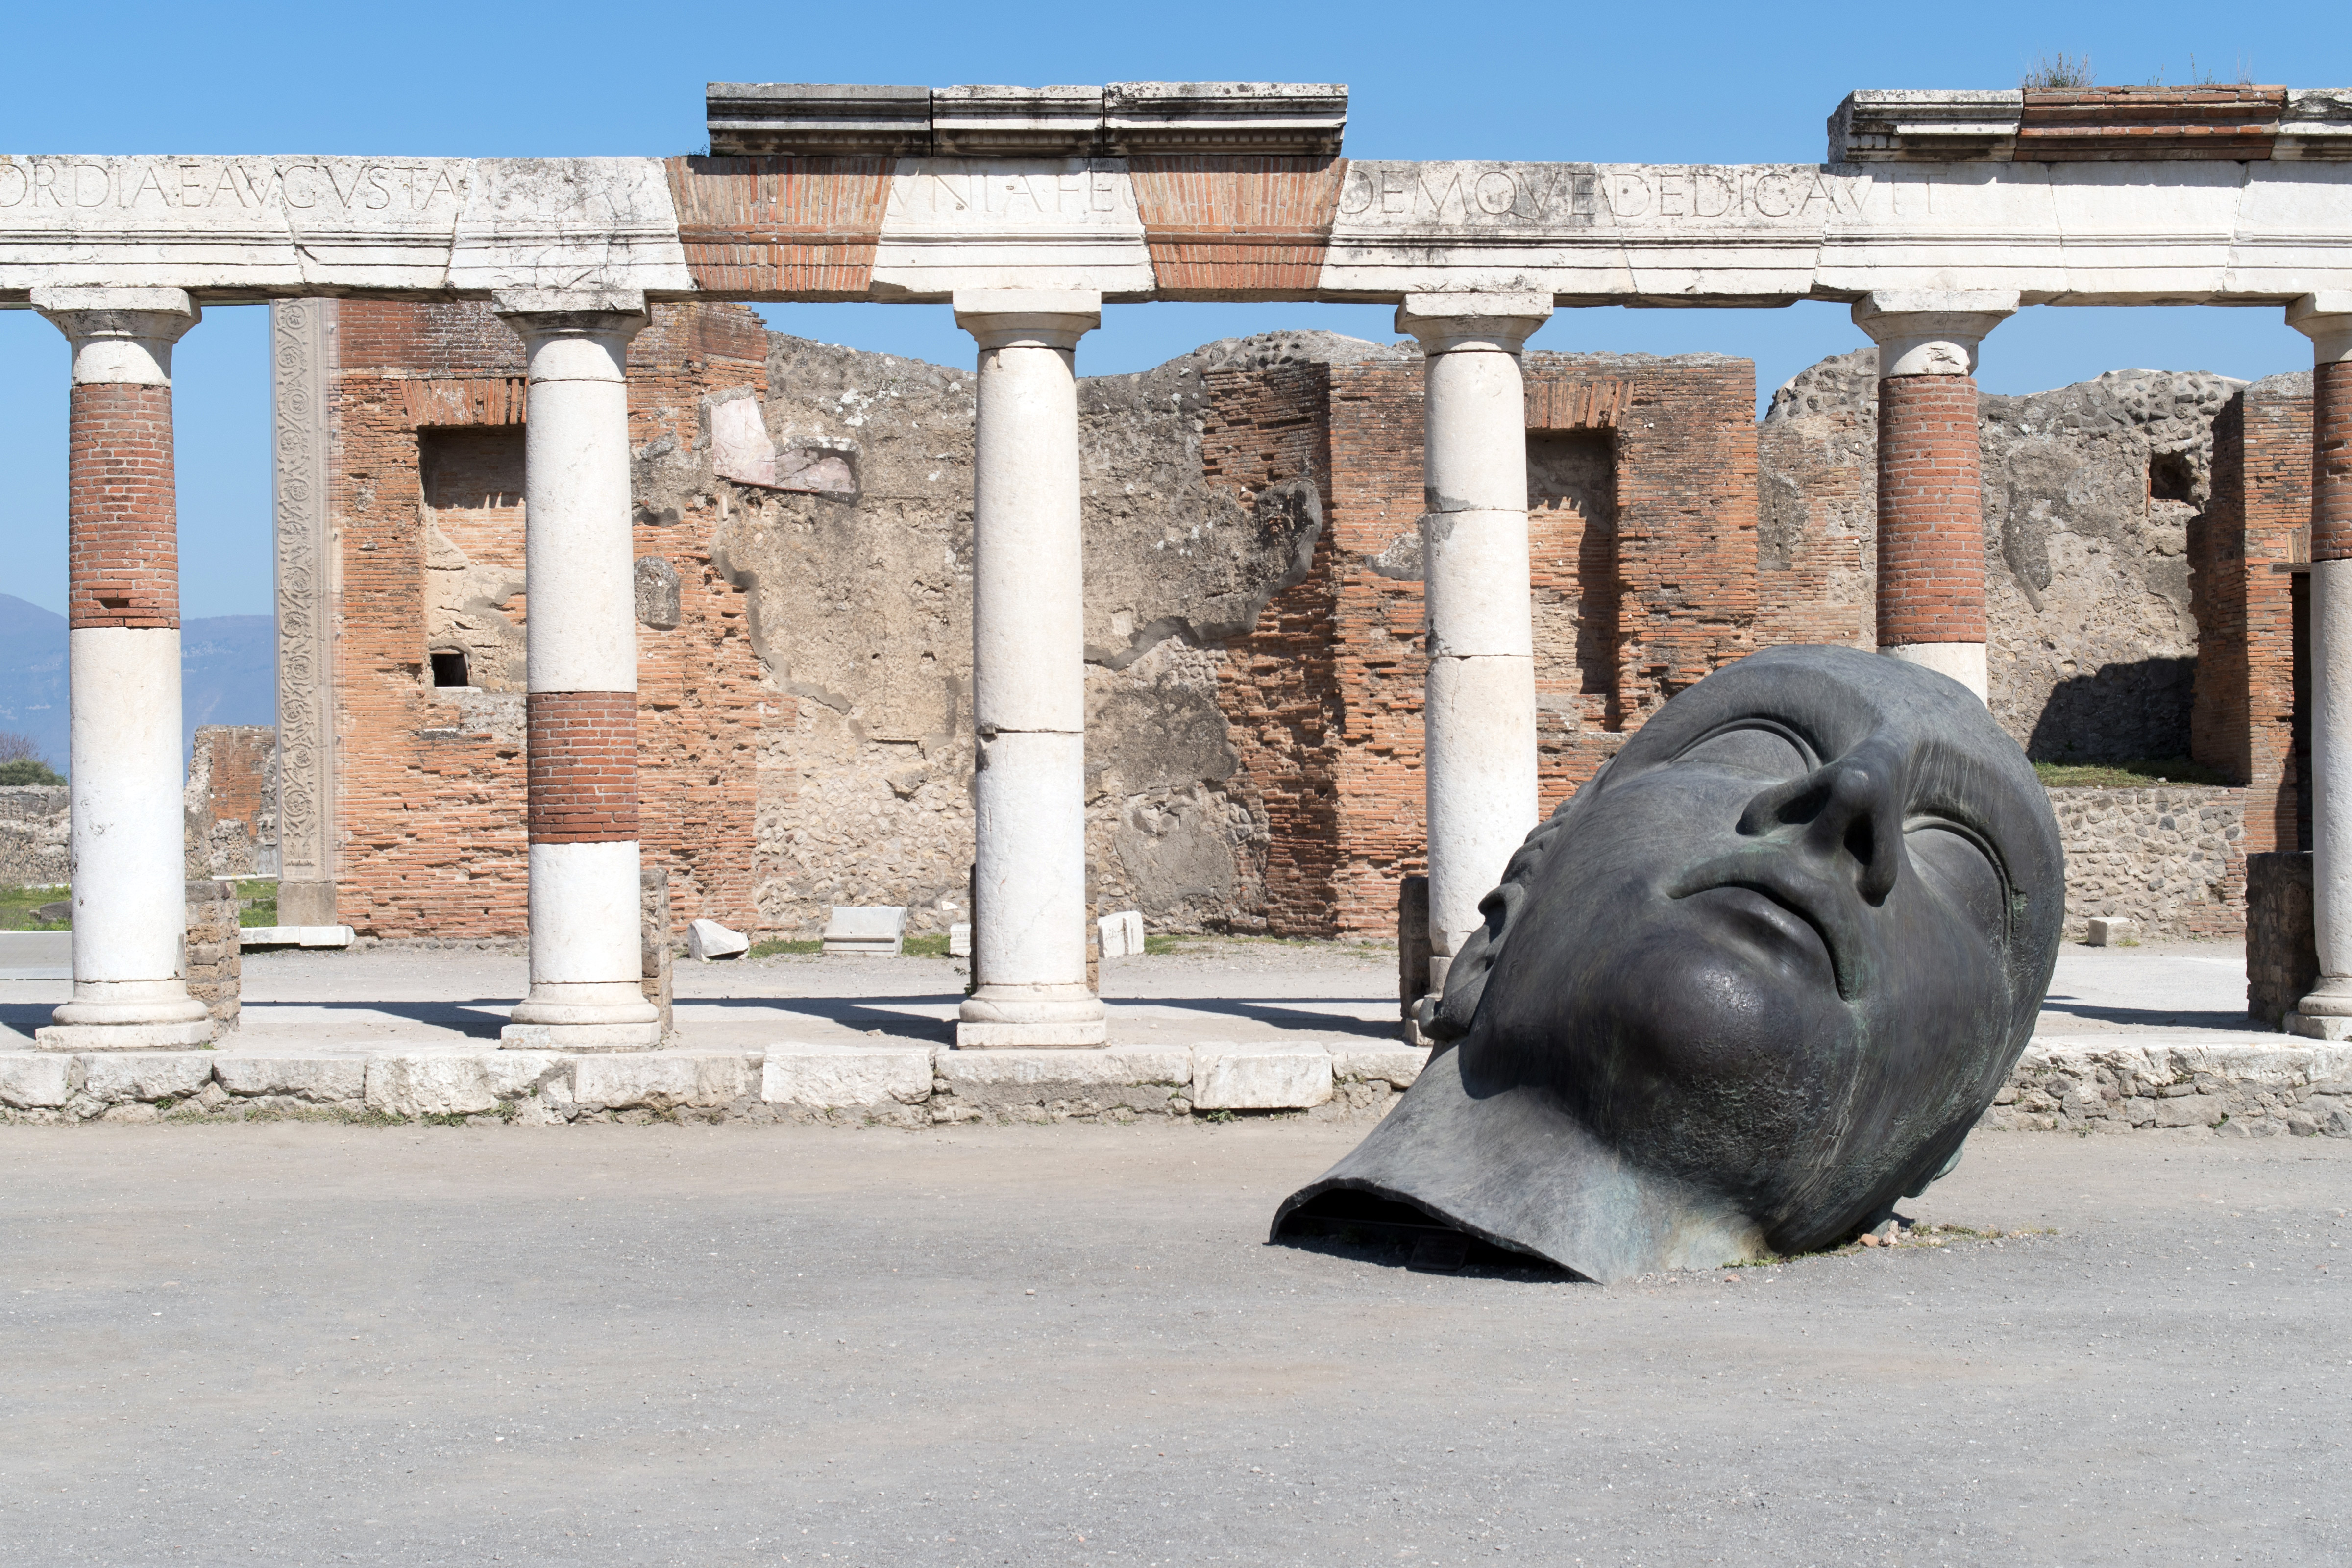 The Pompeii ruins, a UNESCO World Heritage Site